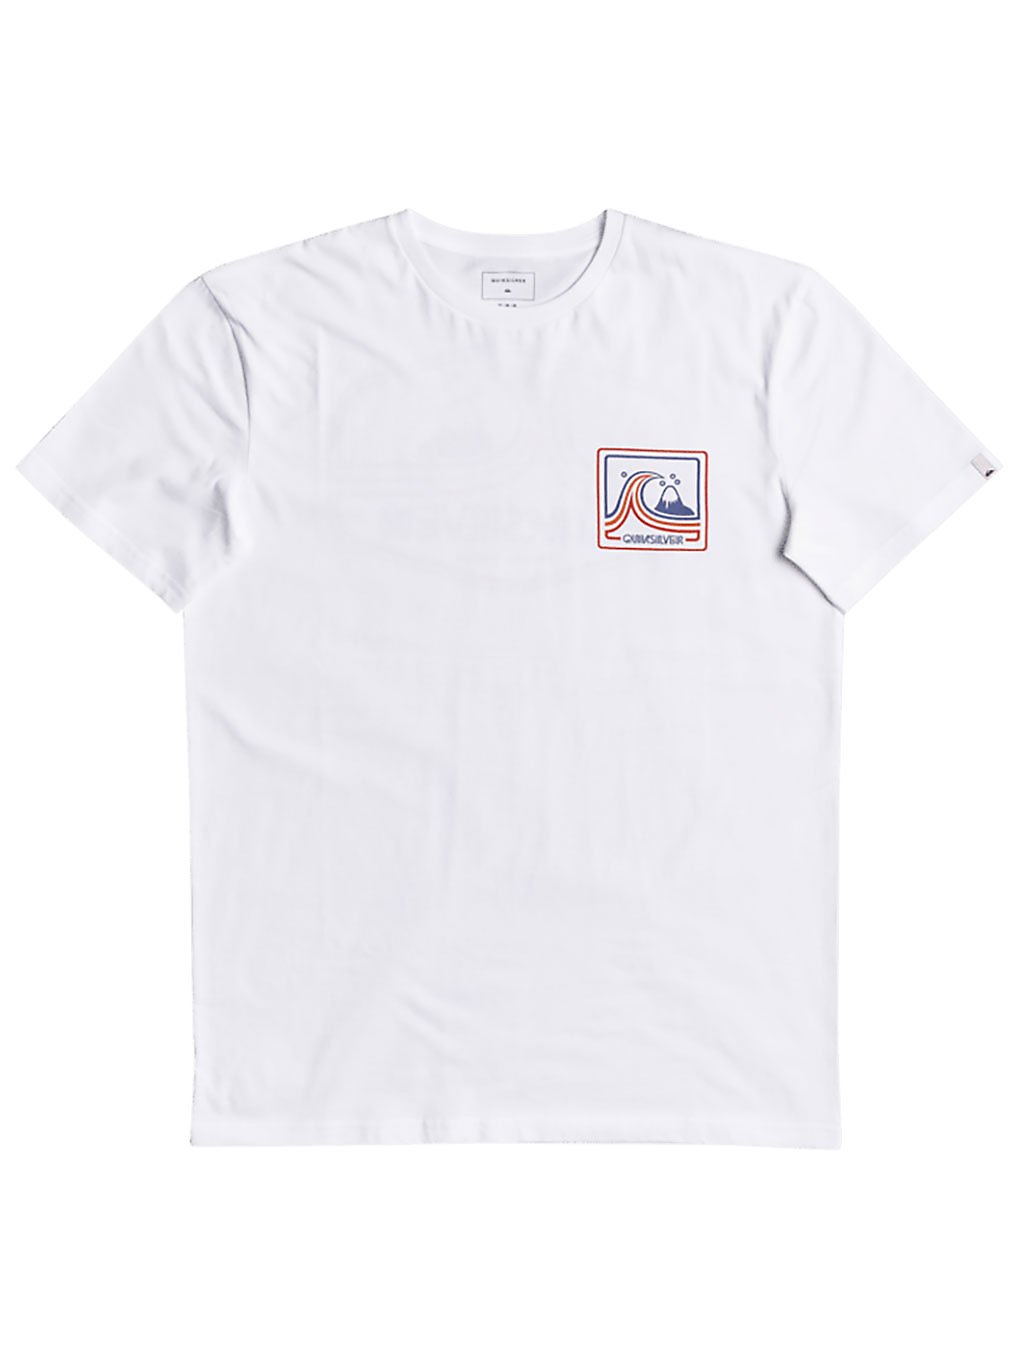 Quiksilver Highway Vagabond T-Shirt white